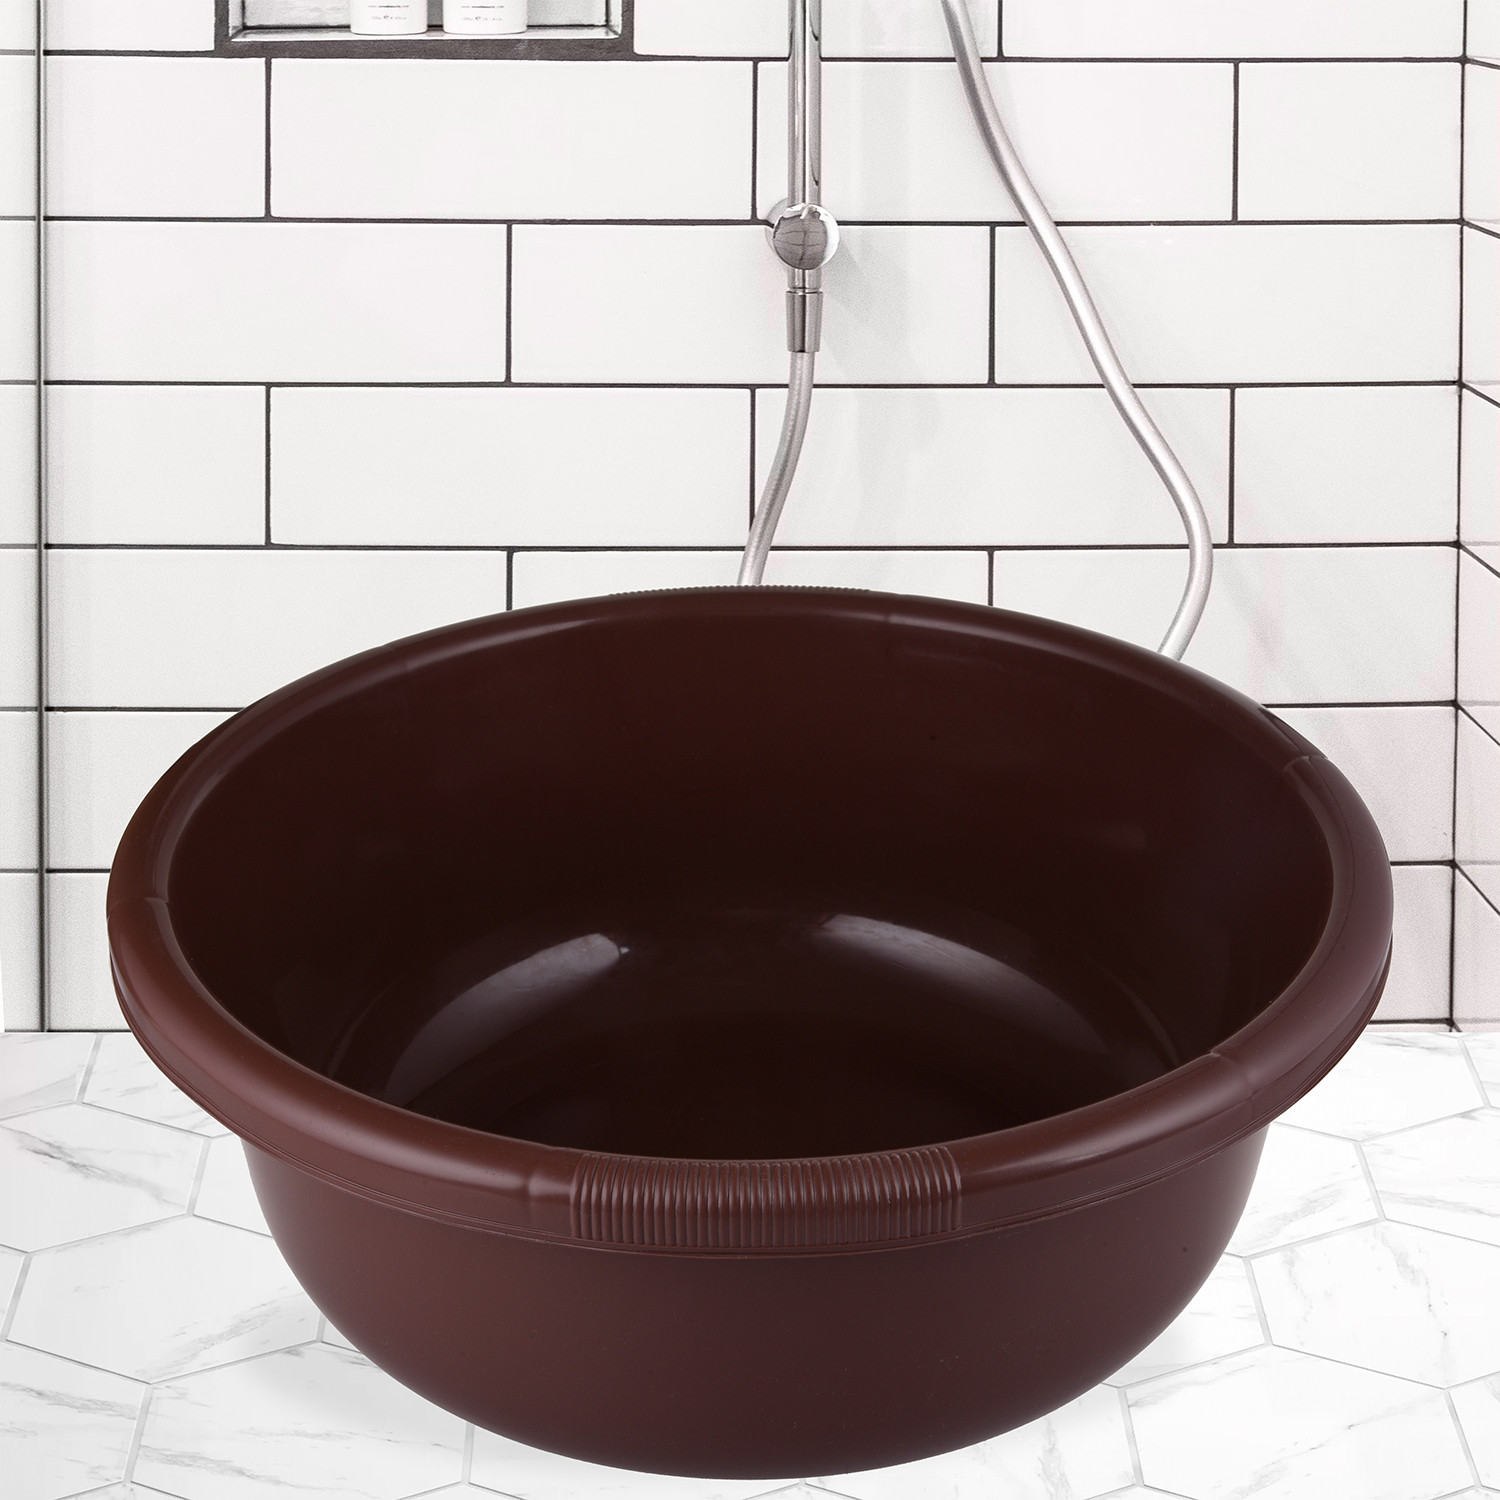 Kuber Industries Bath Tub|Versatile Plastic Utility Gaint Tub|Durable Deep Tub for Baby Bathing|Washing Clothes|Feeding Pan|26 Liter|Pack of 2 (Brown & Coffee)